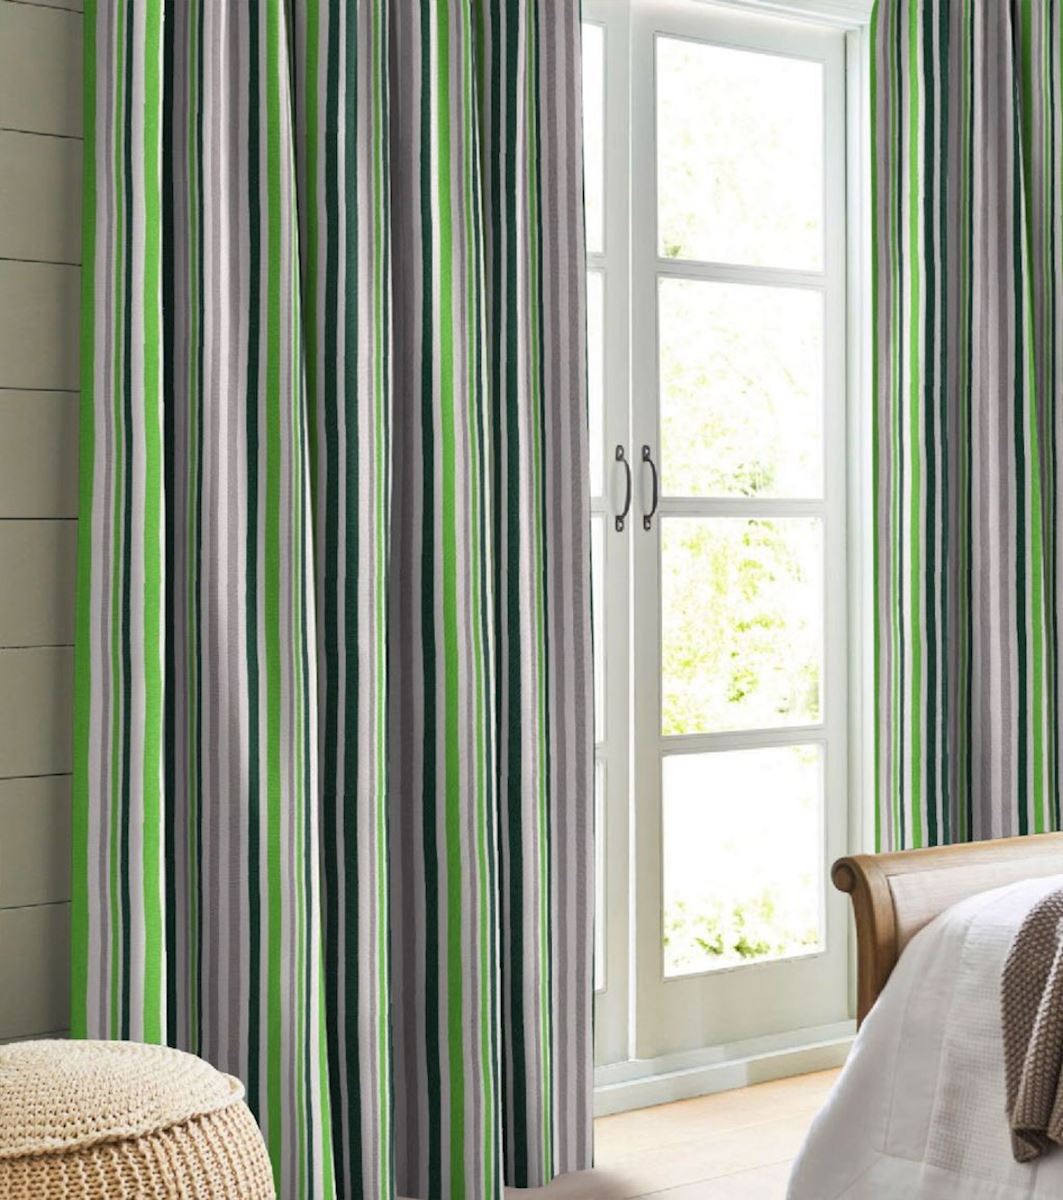 Night curtain green stripe